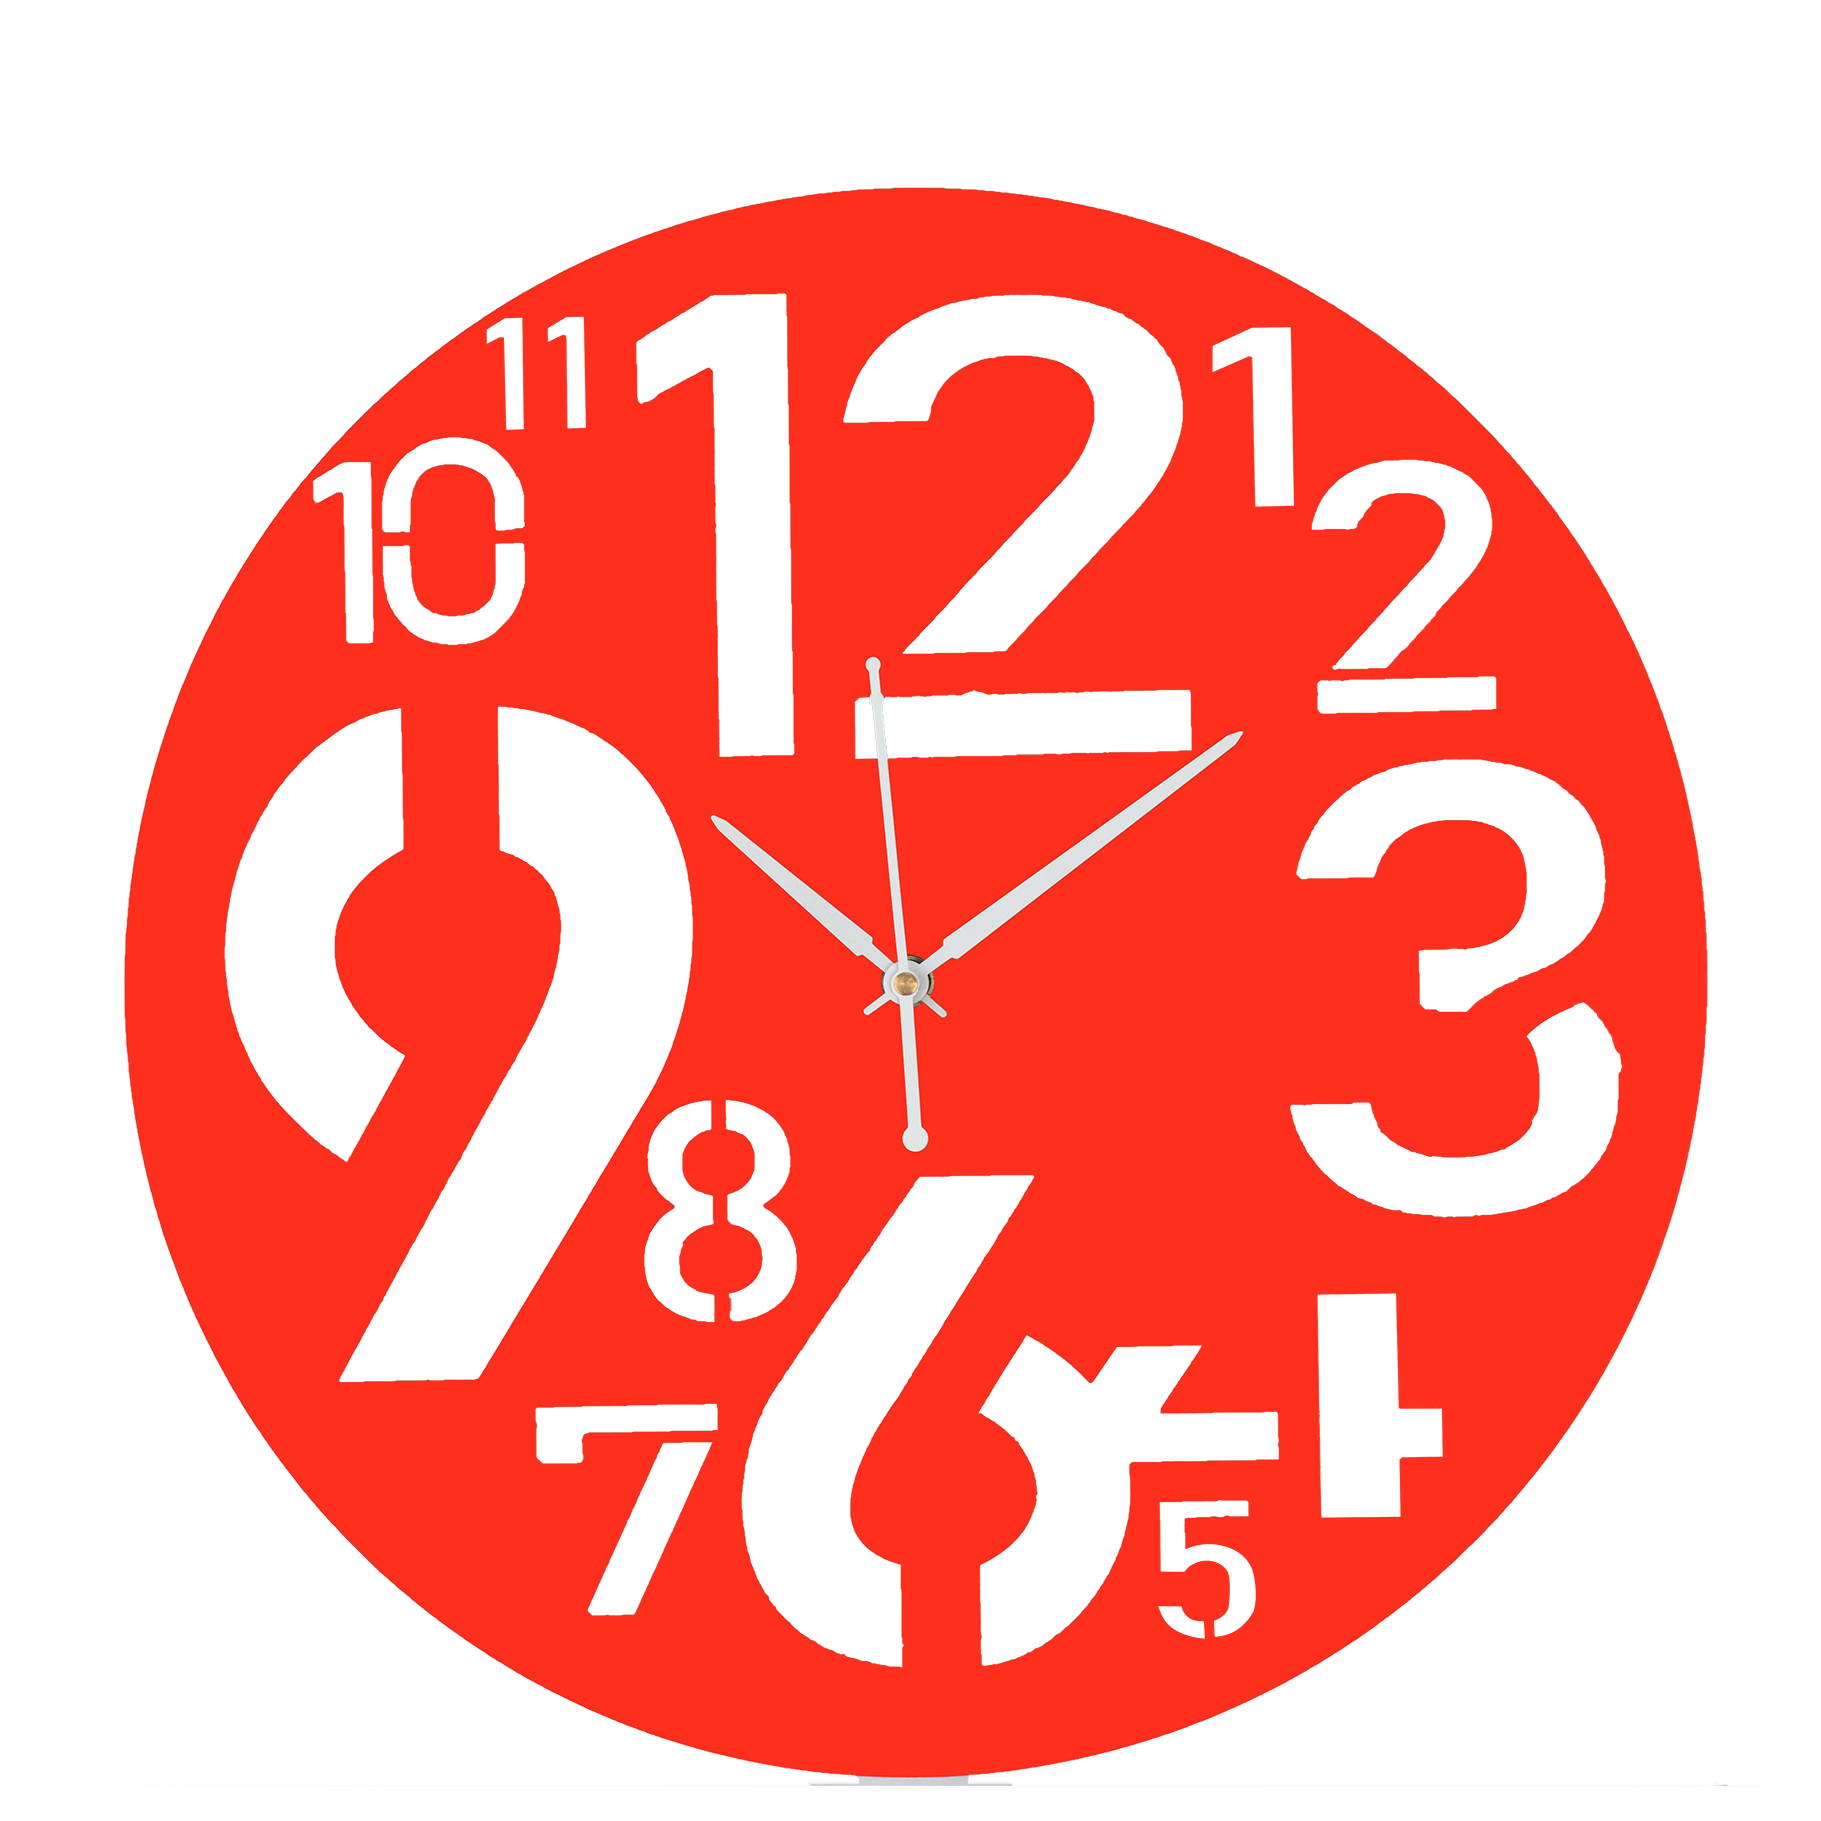 Alpha - Wall Clock